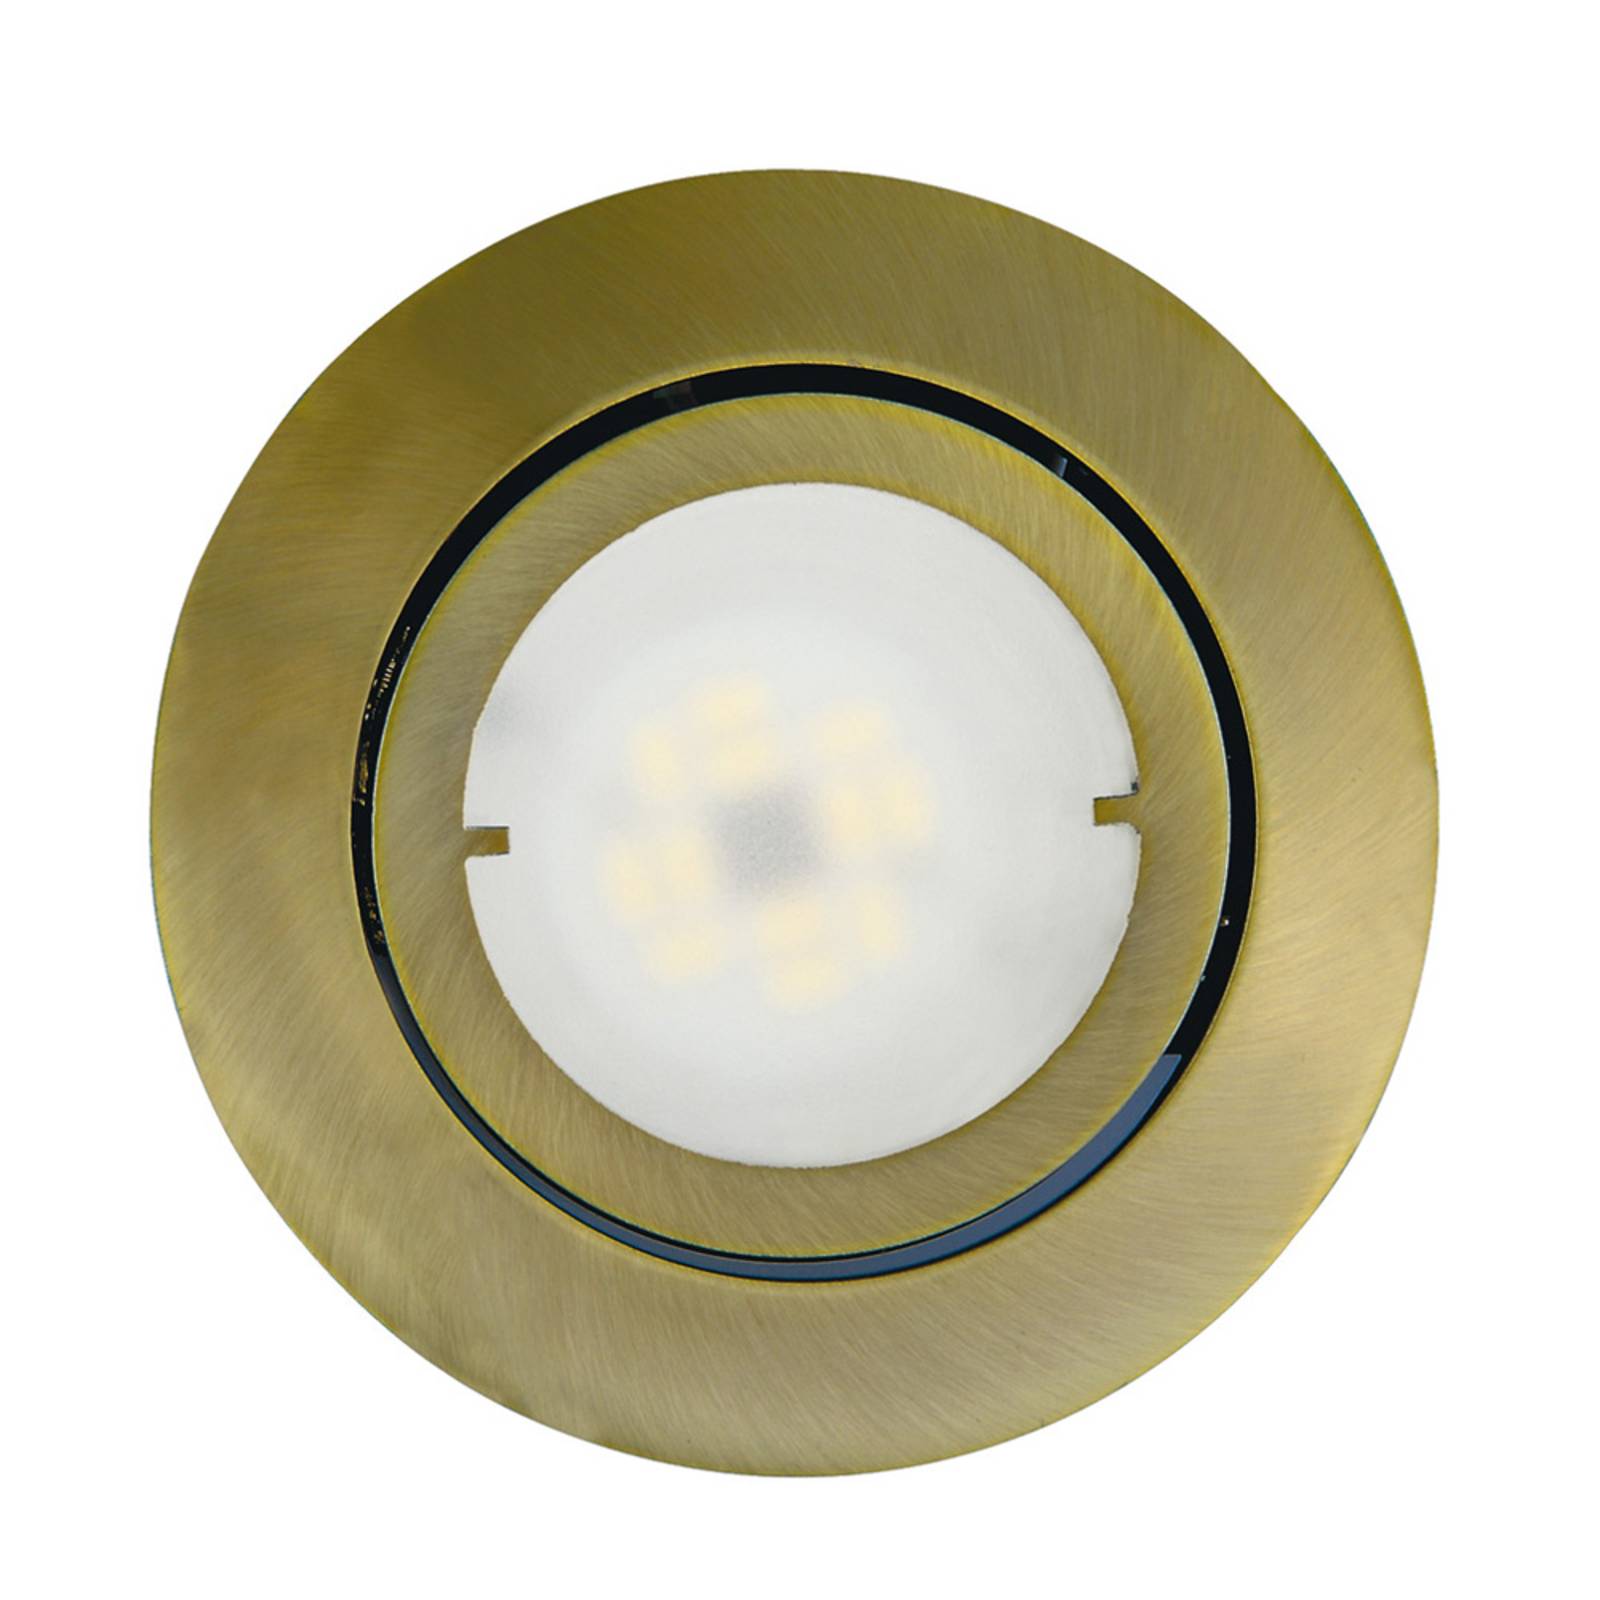 Image of Lampe encastrable LED Joanie, laiton ancien 4019231028628